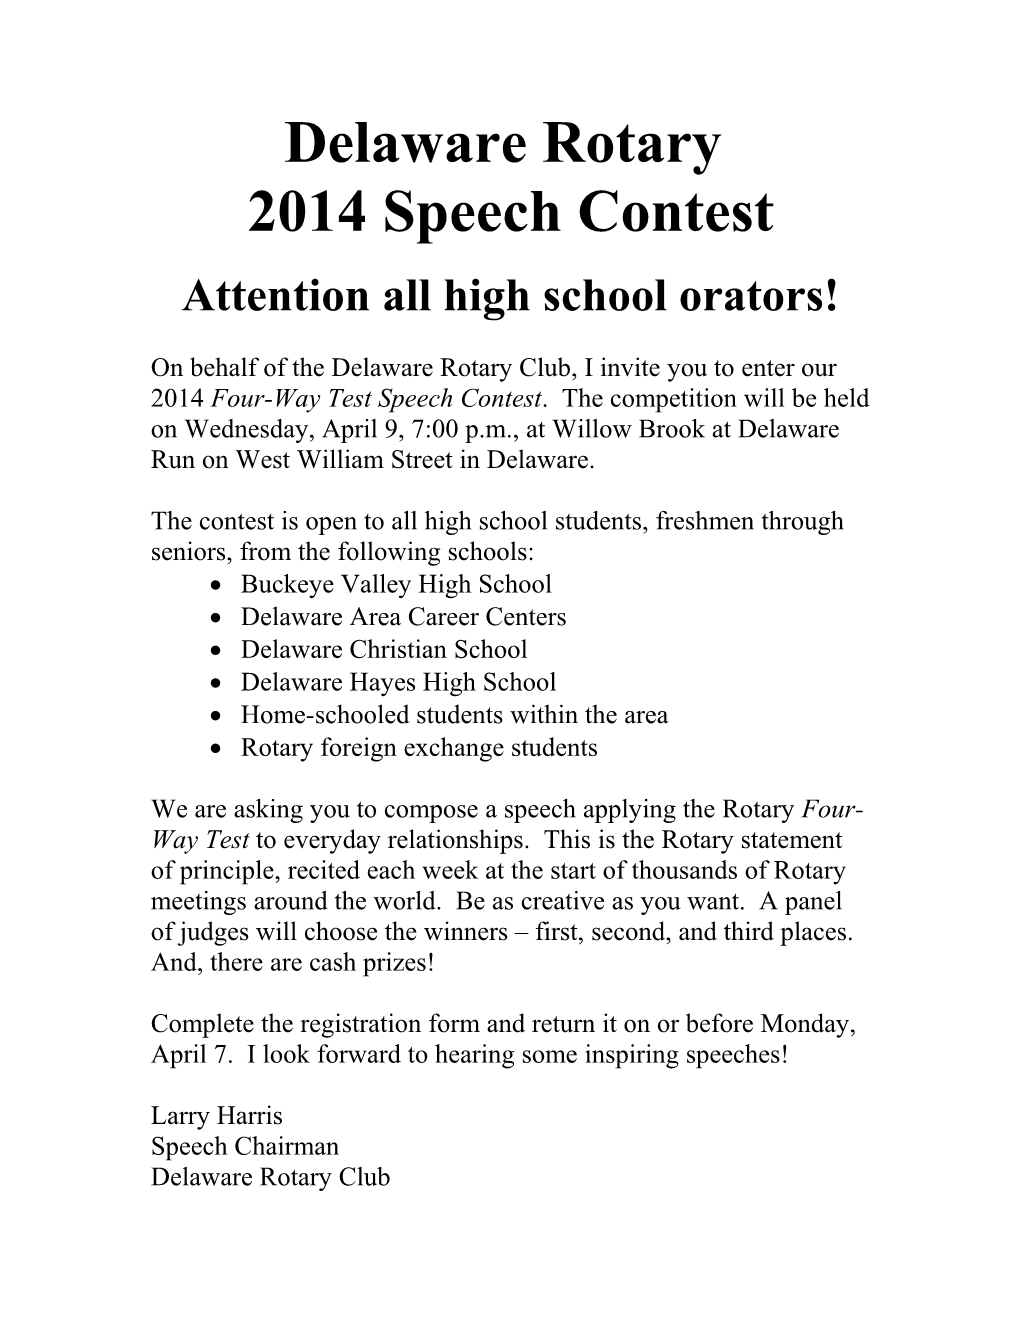 Attention All High School Orators